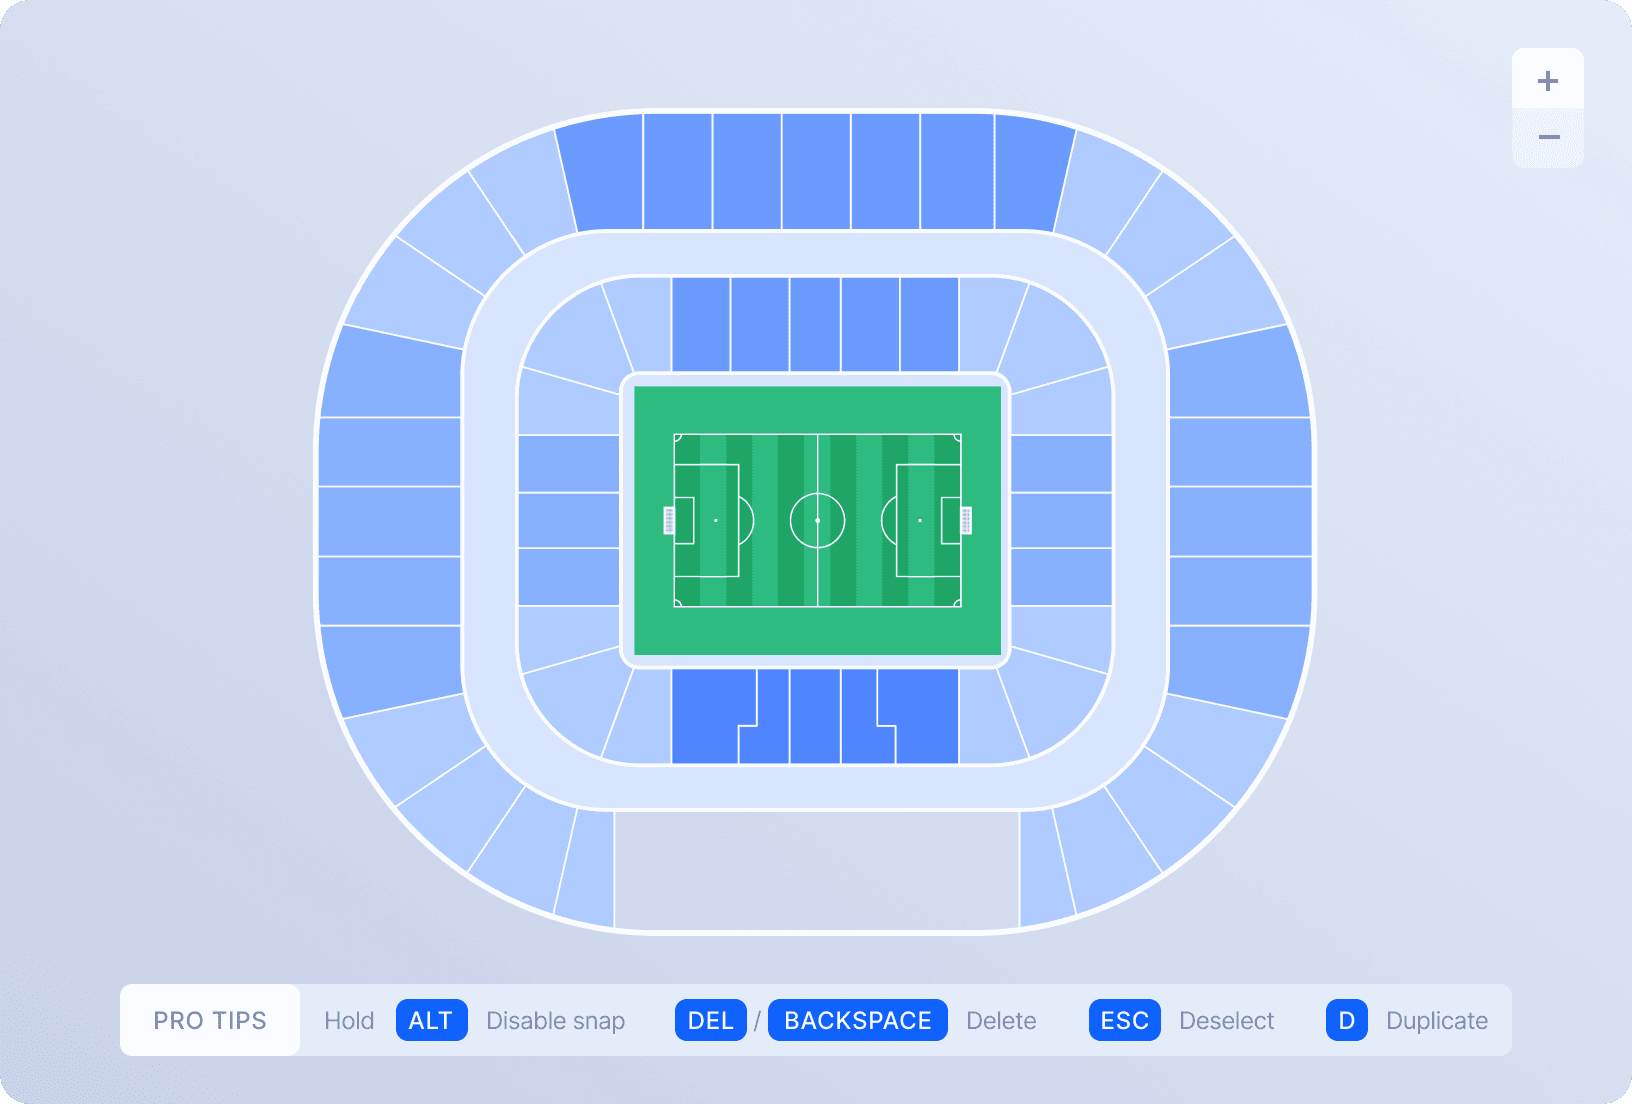 Sports stadium seating map